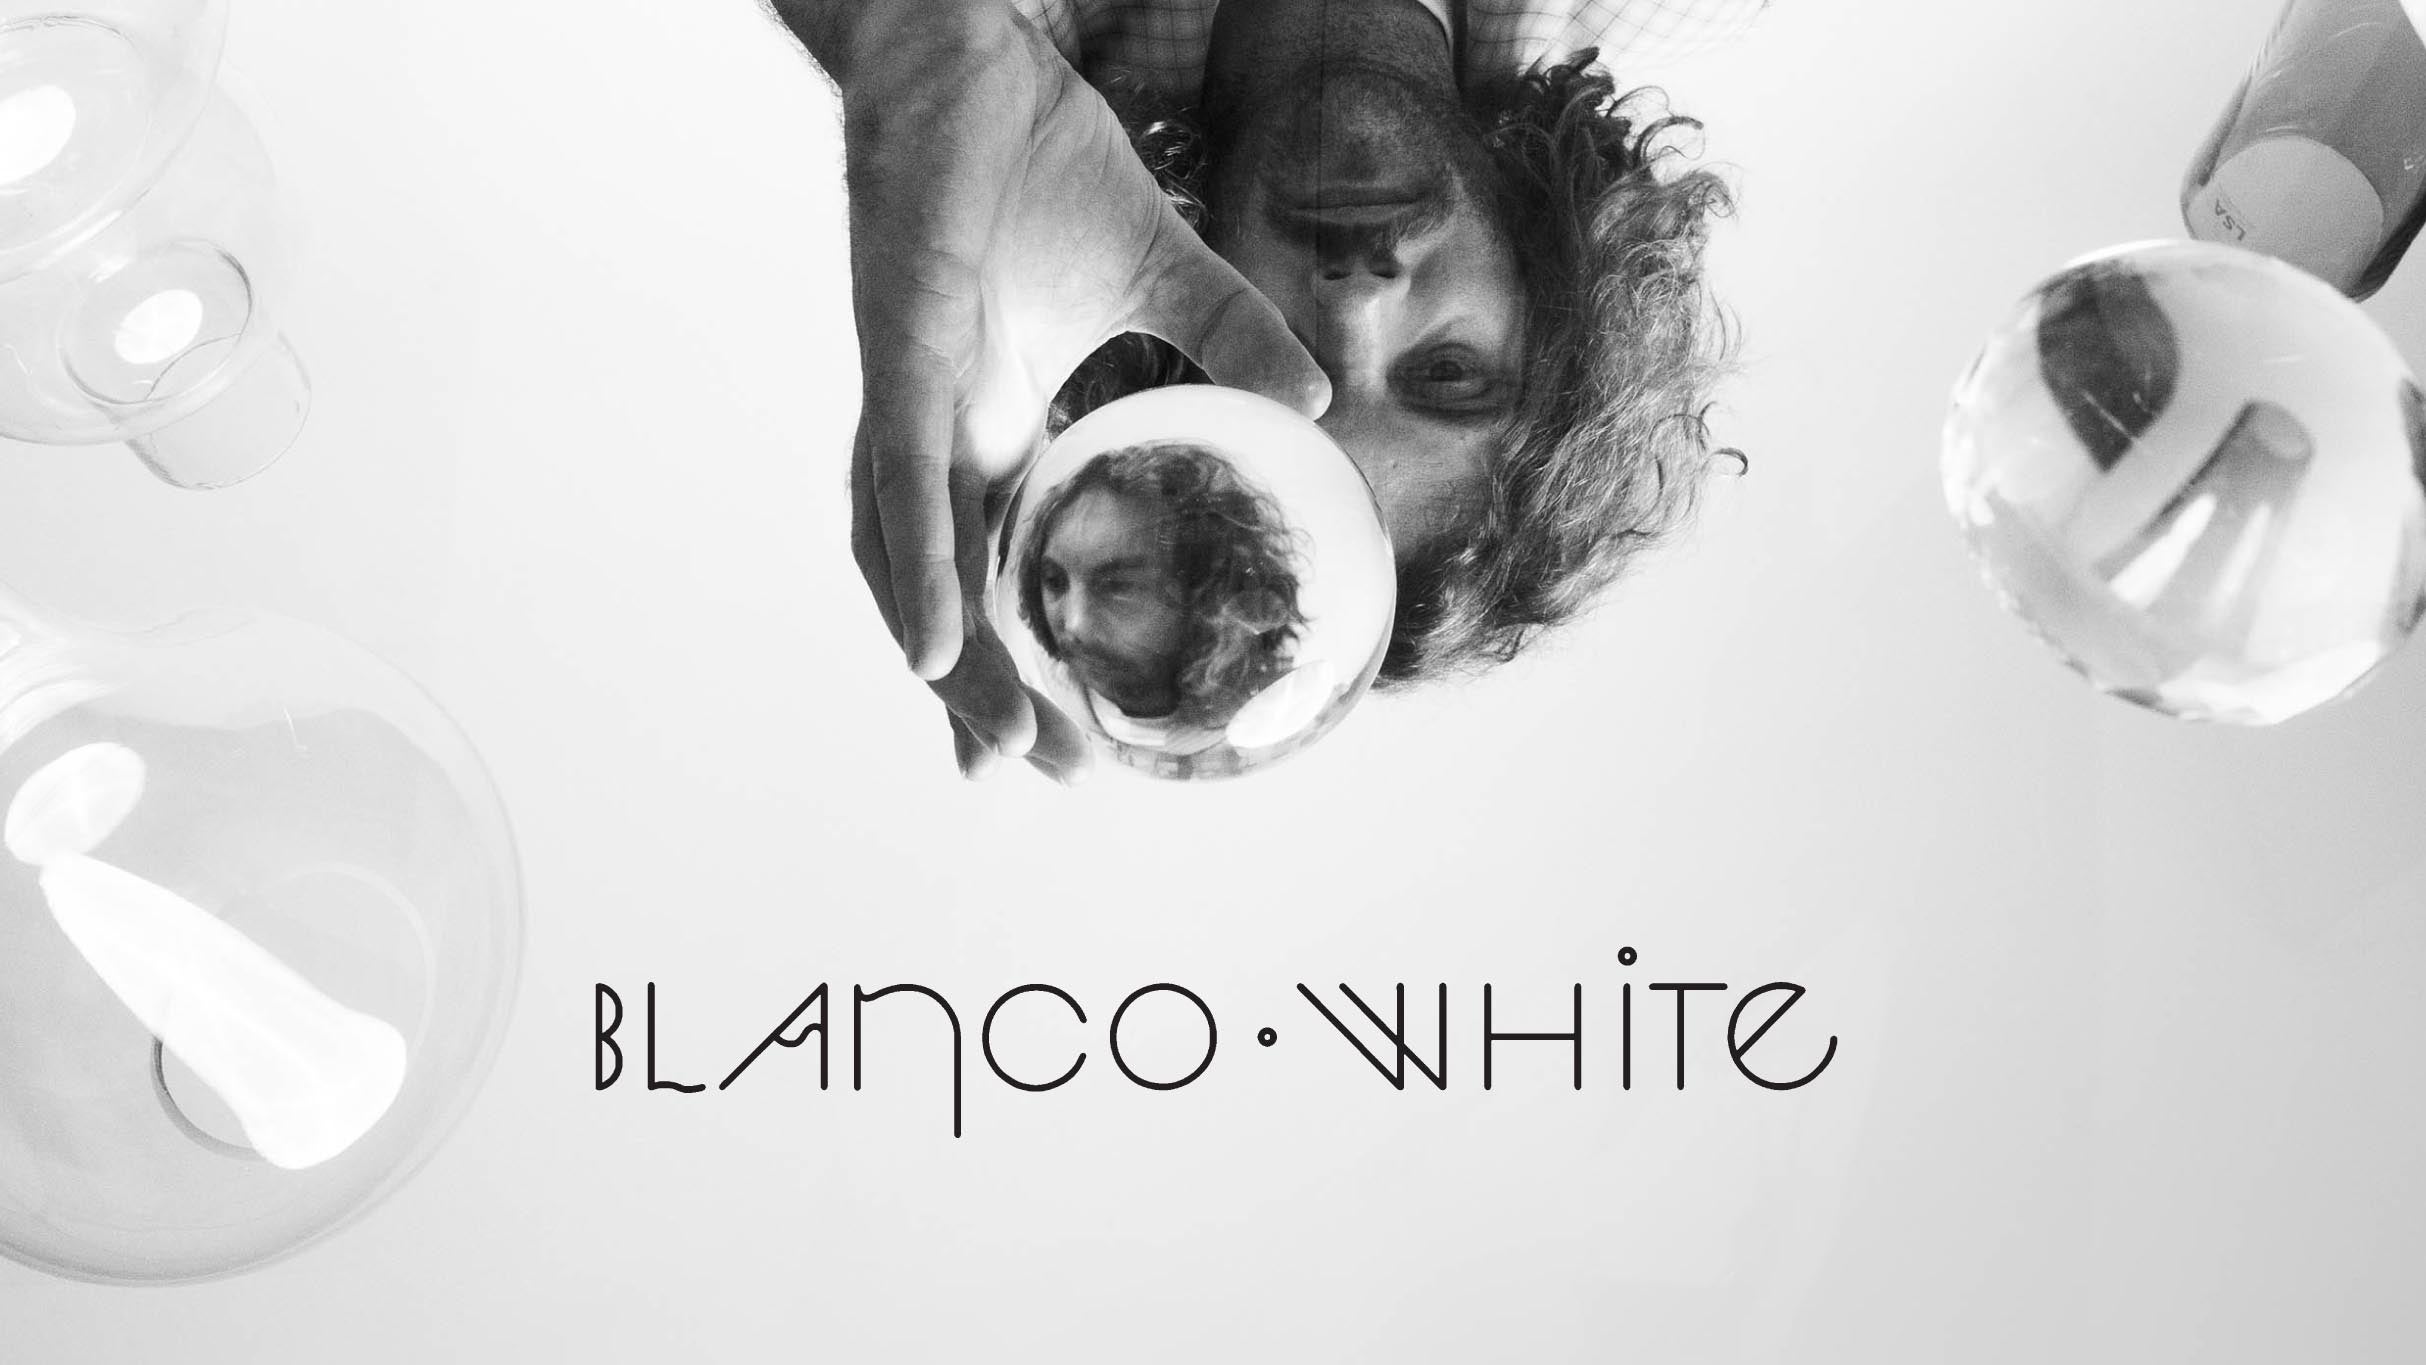 Blanco White en Barcelona